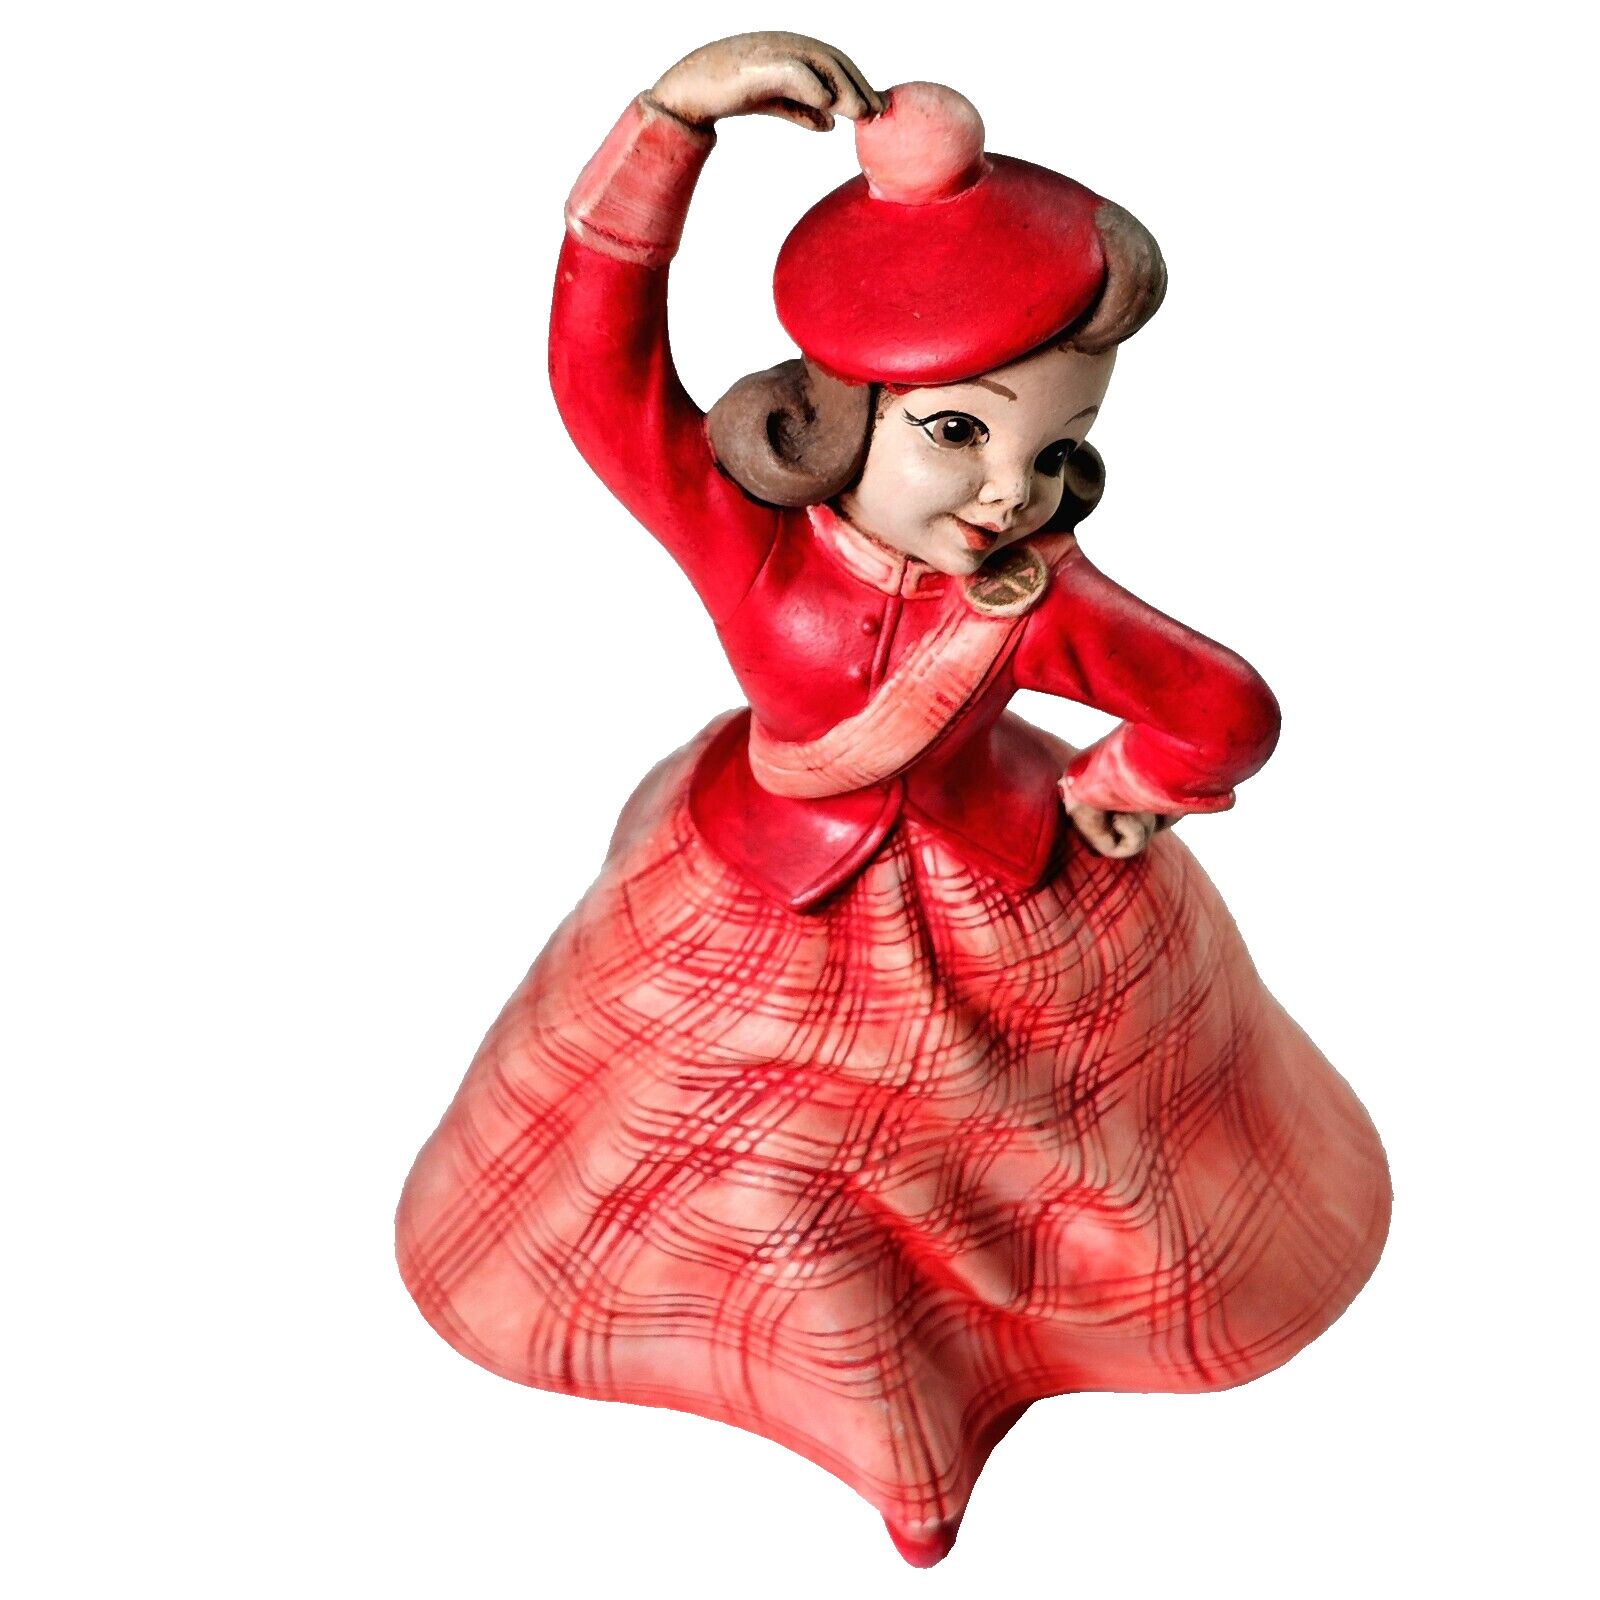 Antique Vintage Ceramic Figurine Happy Girl In Red Dress Lang's Ceramics 7.5in